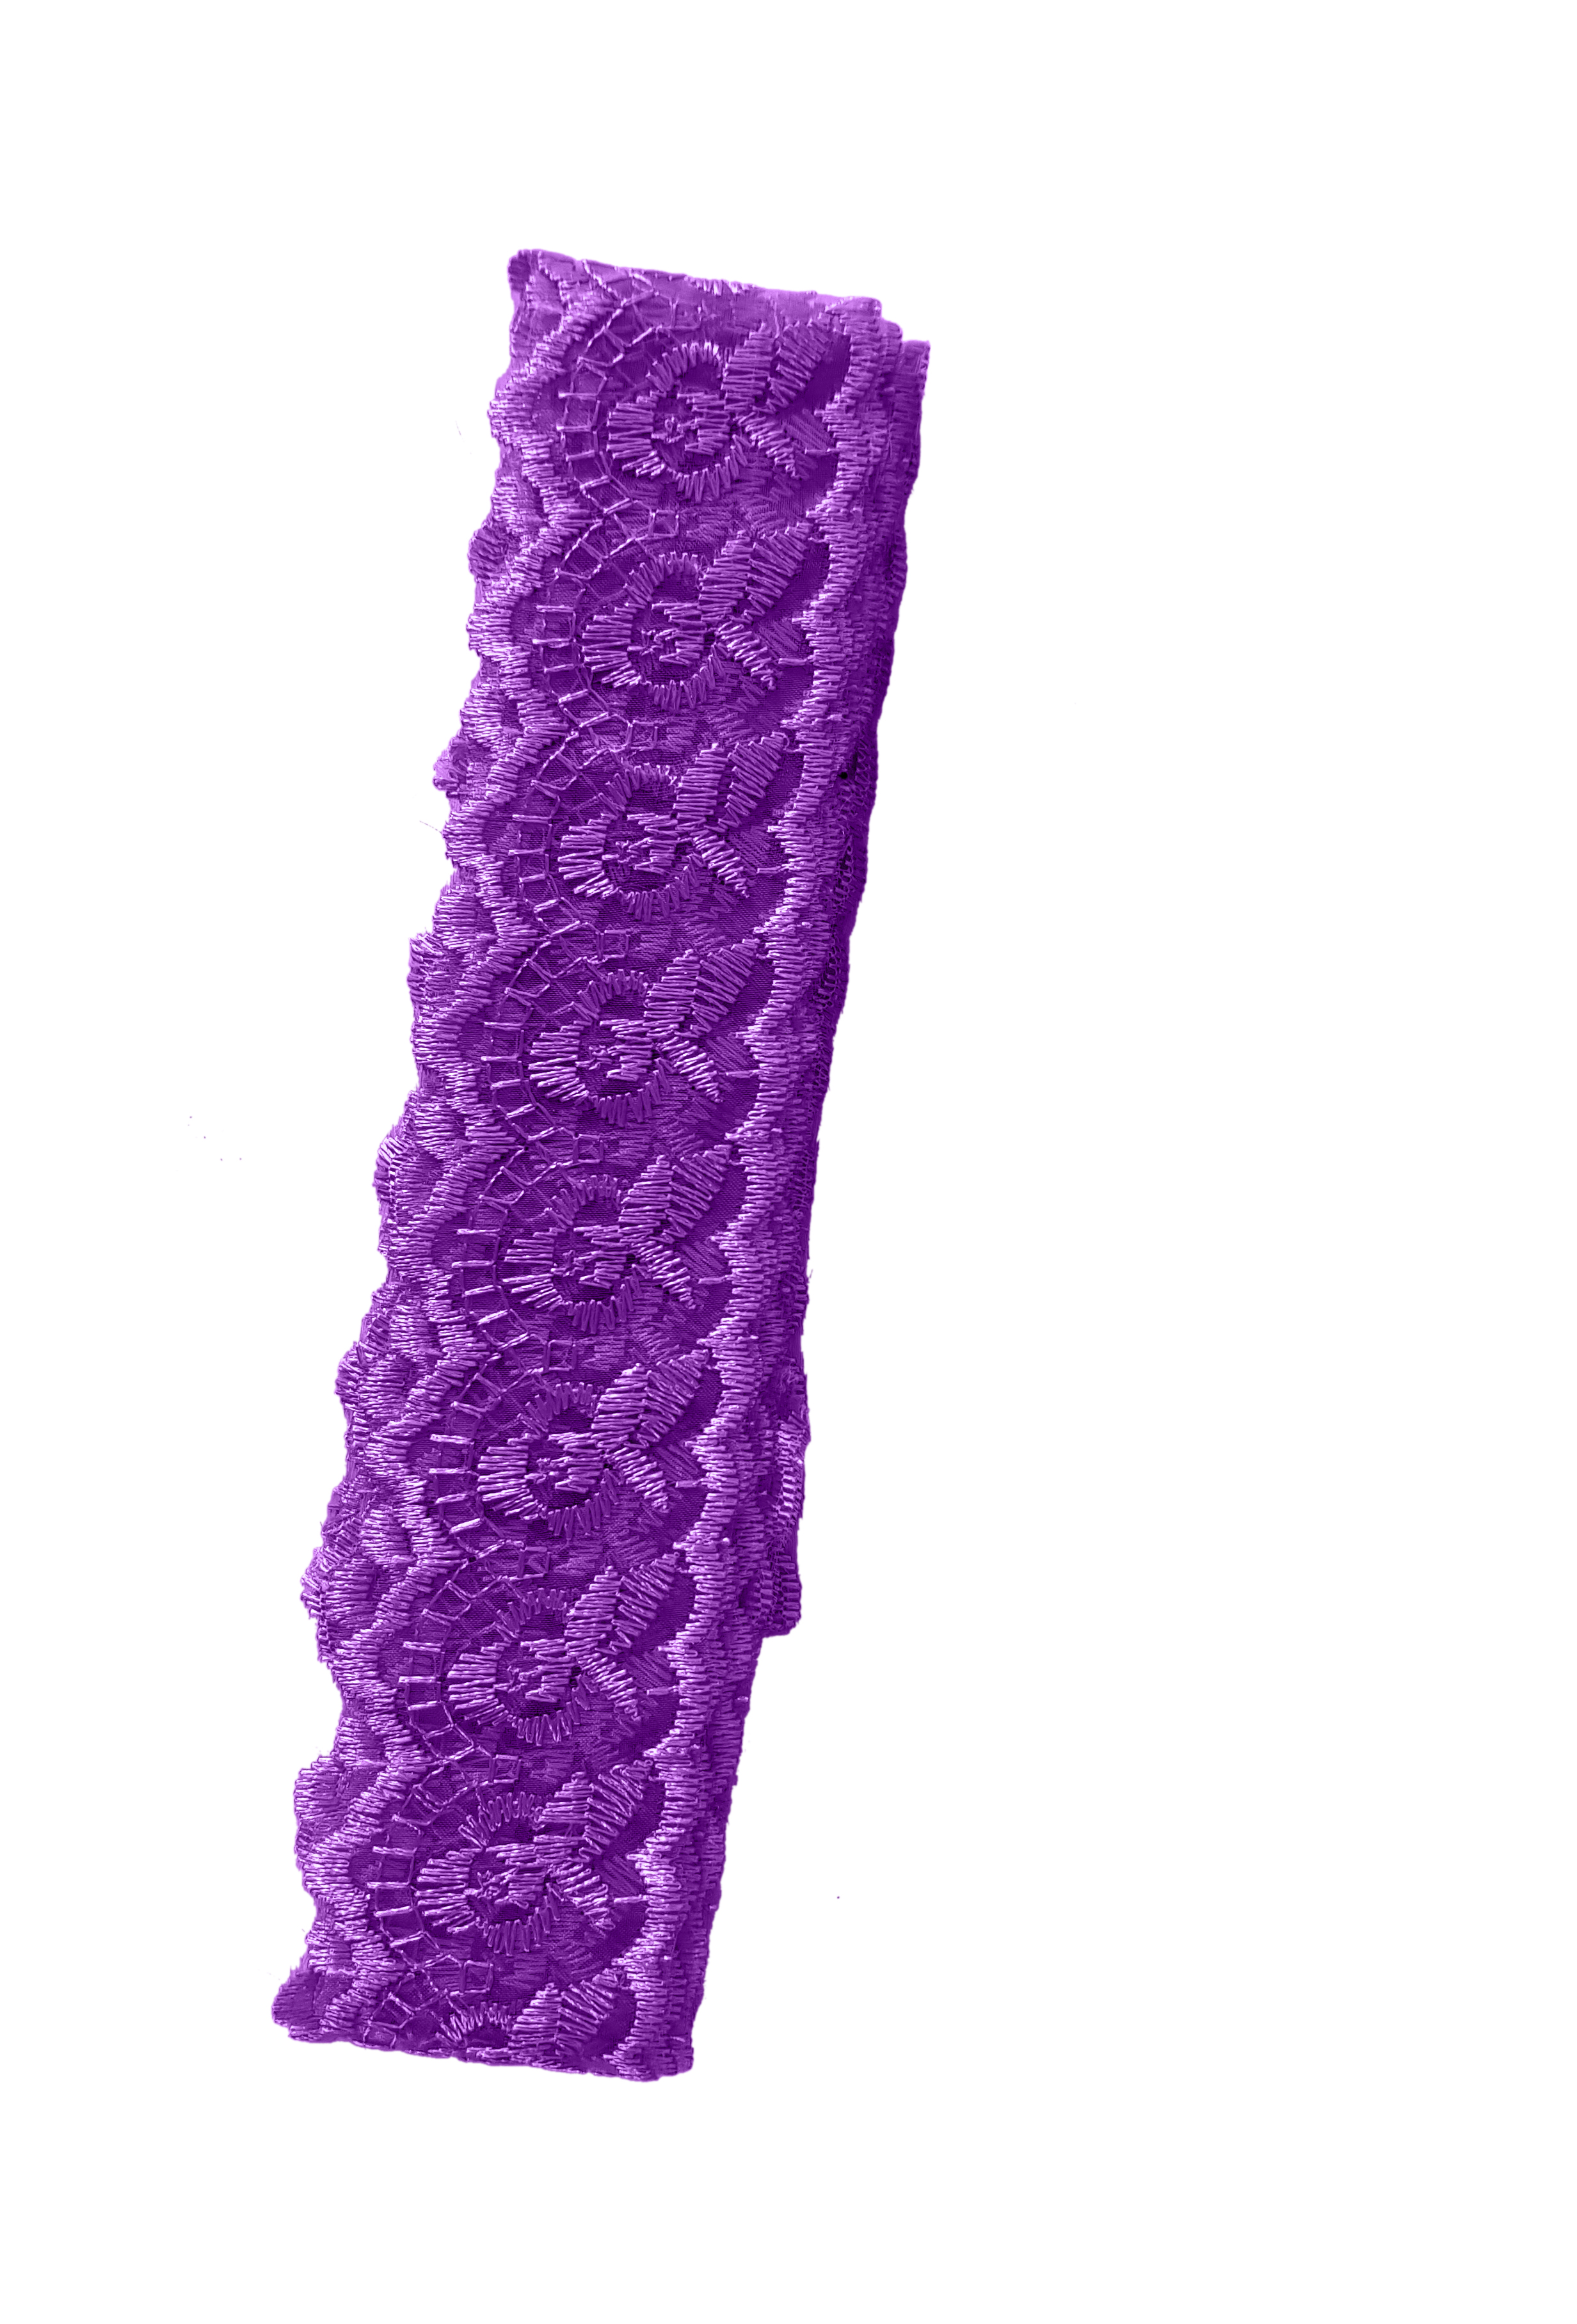 Dark Purple Lace 1m